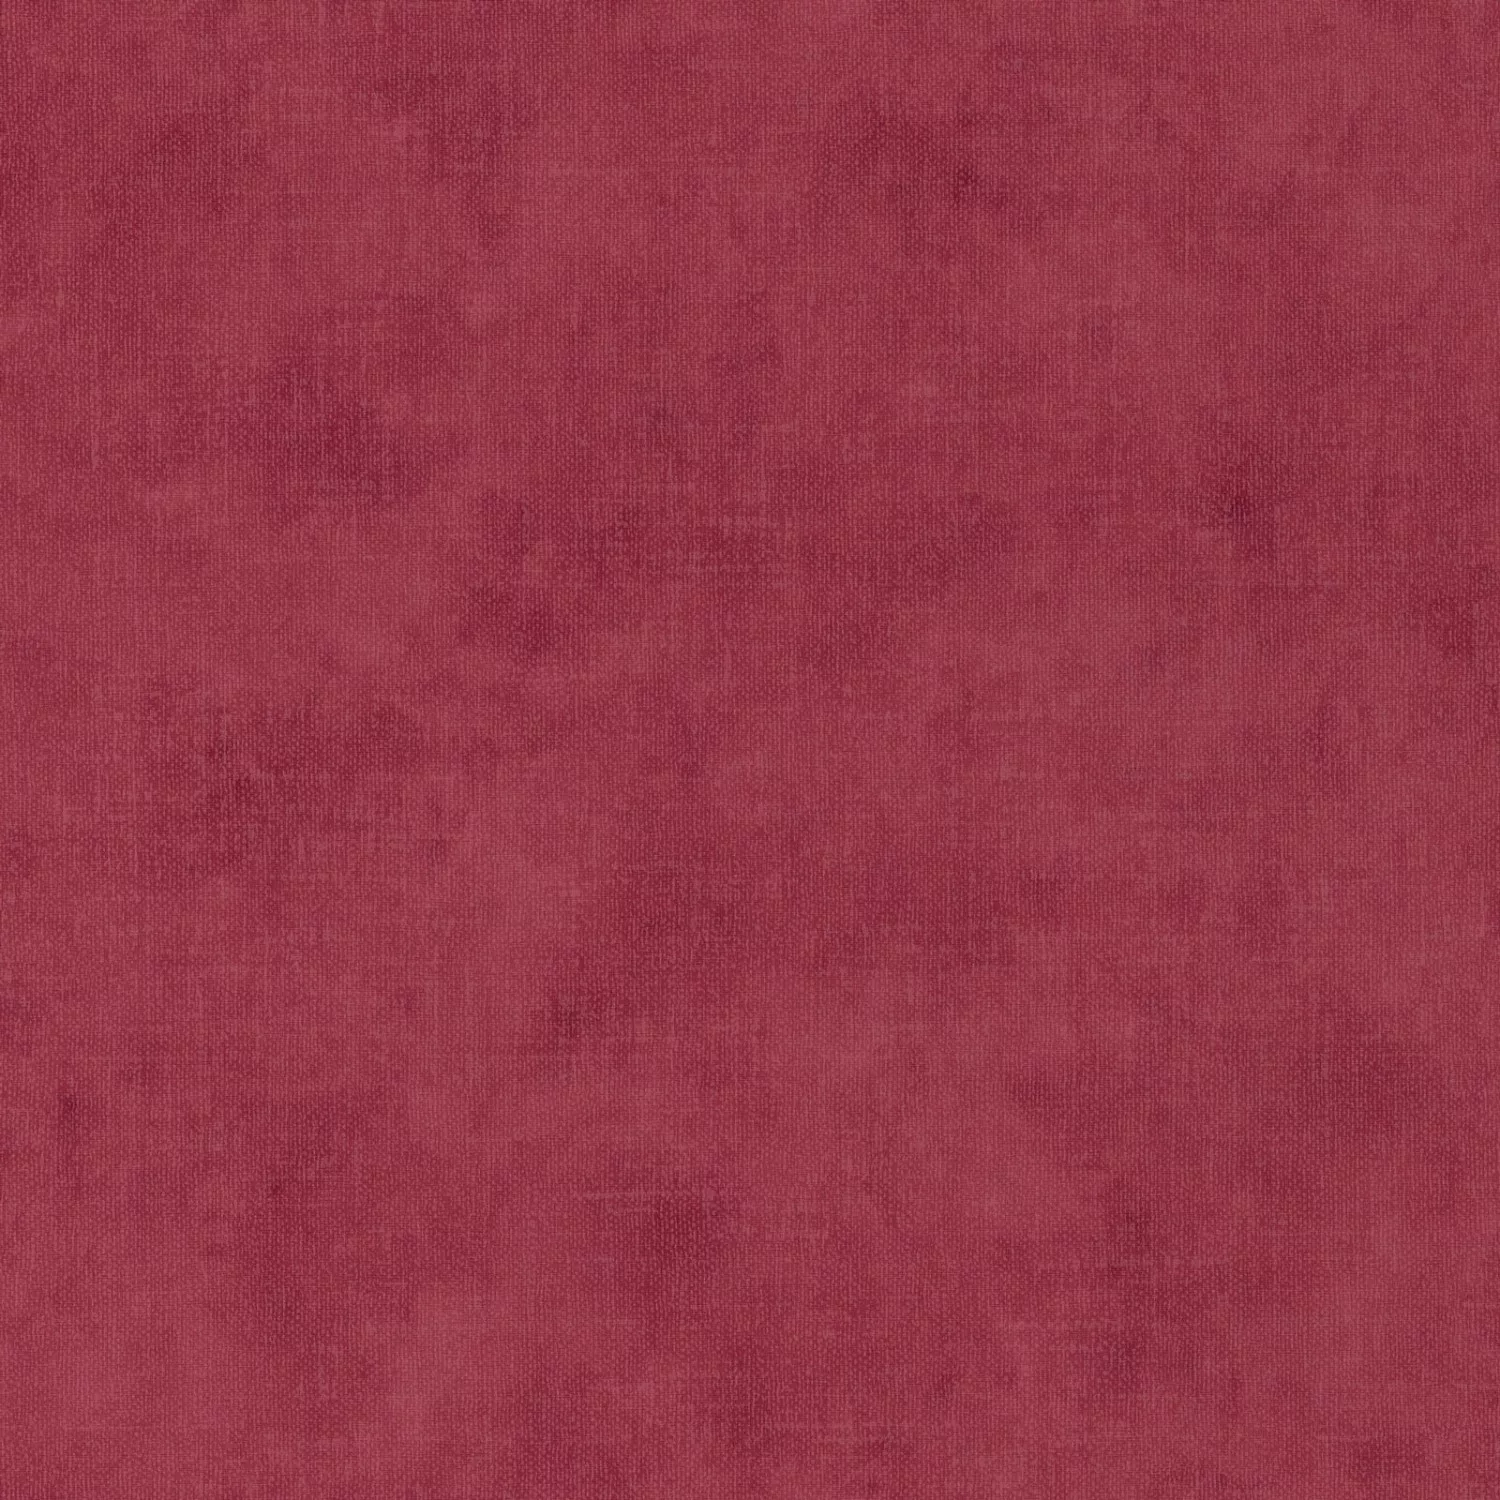 Bricoflor Uni Vliestapete in Bordeaux Rot Einfarbige Tapete in Weinrot Idea günstig online kaufen